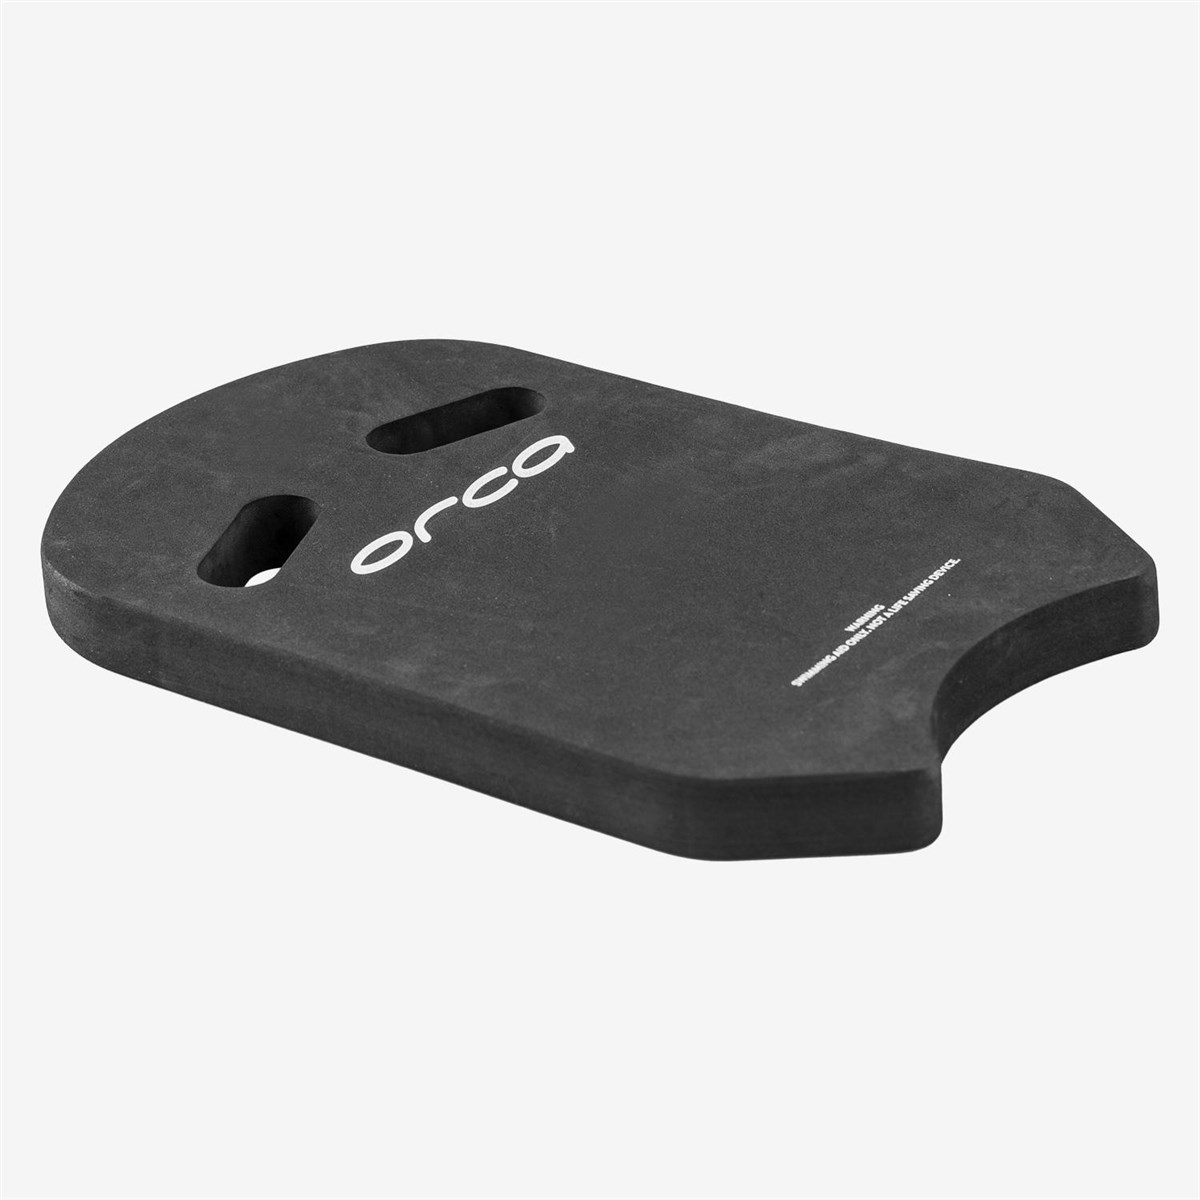 Orca Swim Board product image